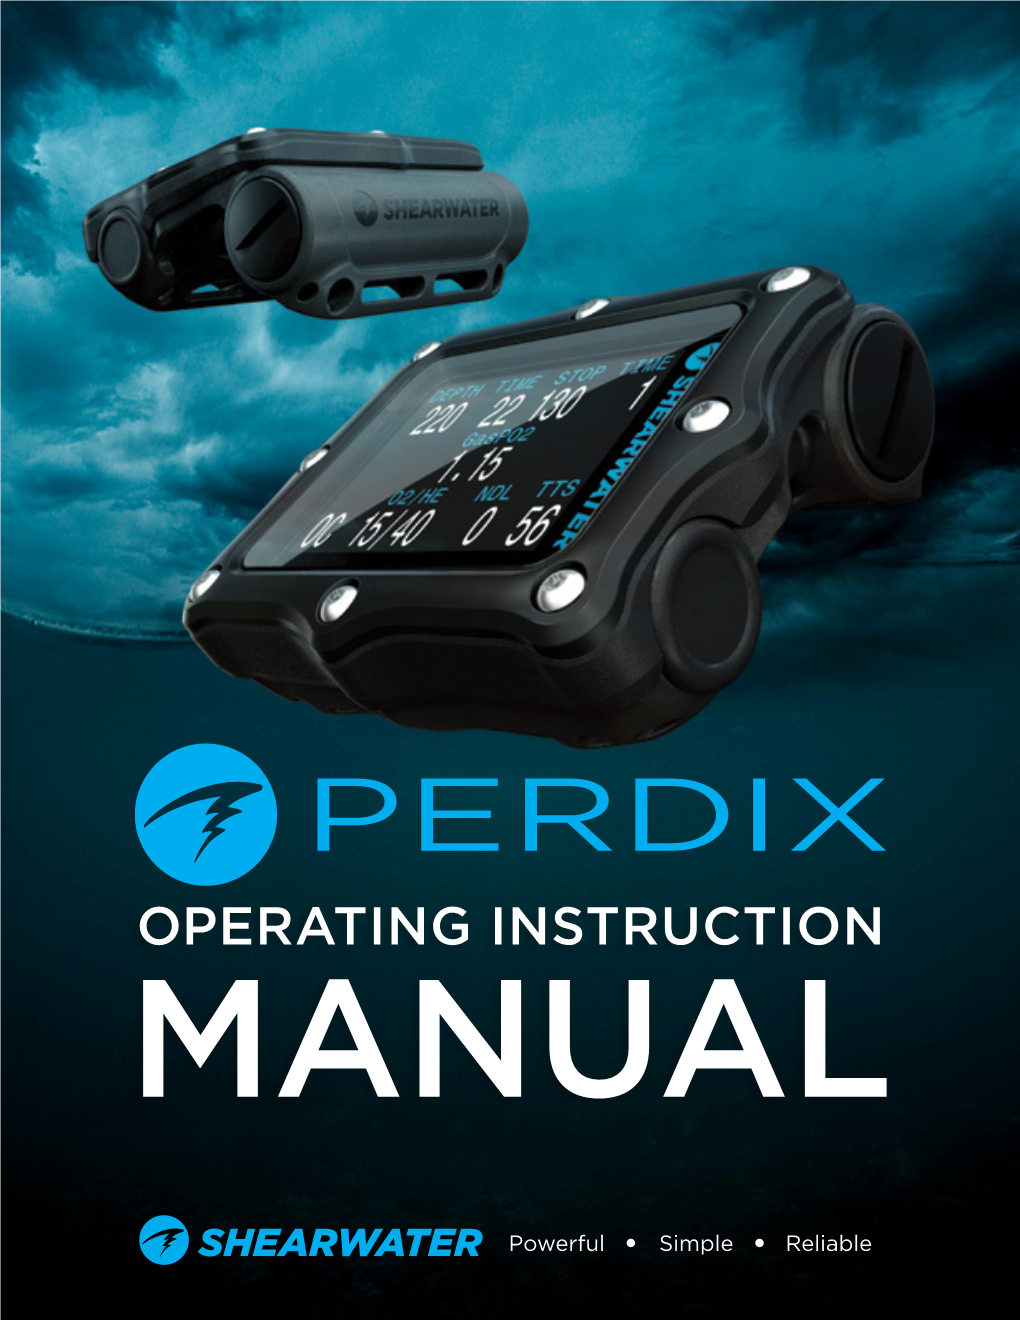 Operating Instruction Manual